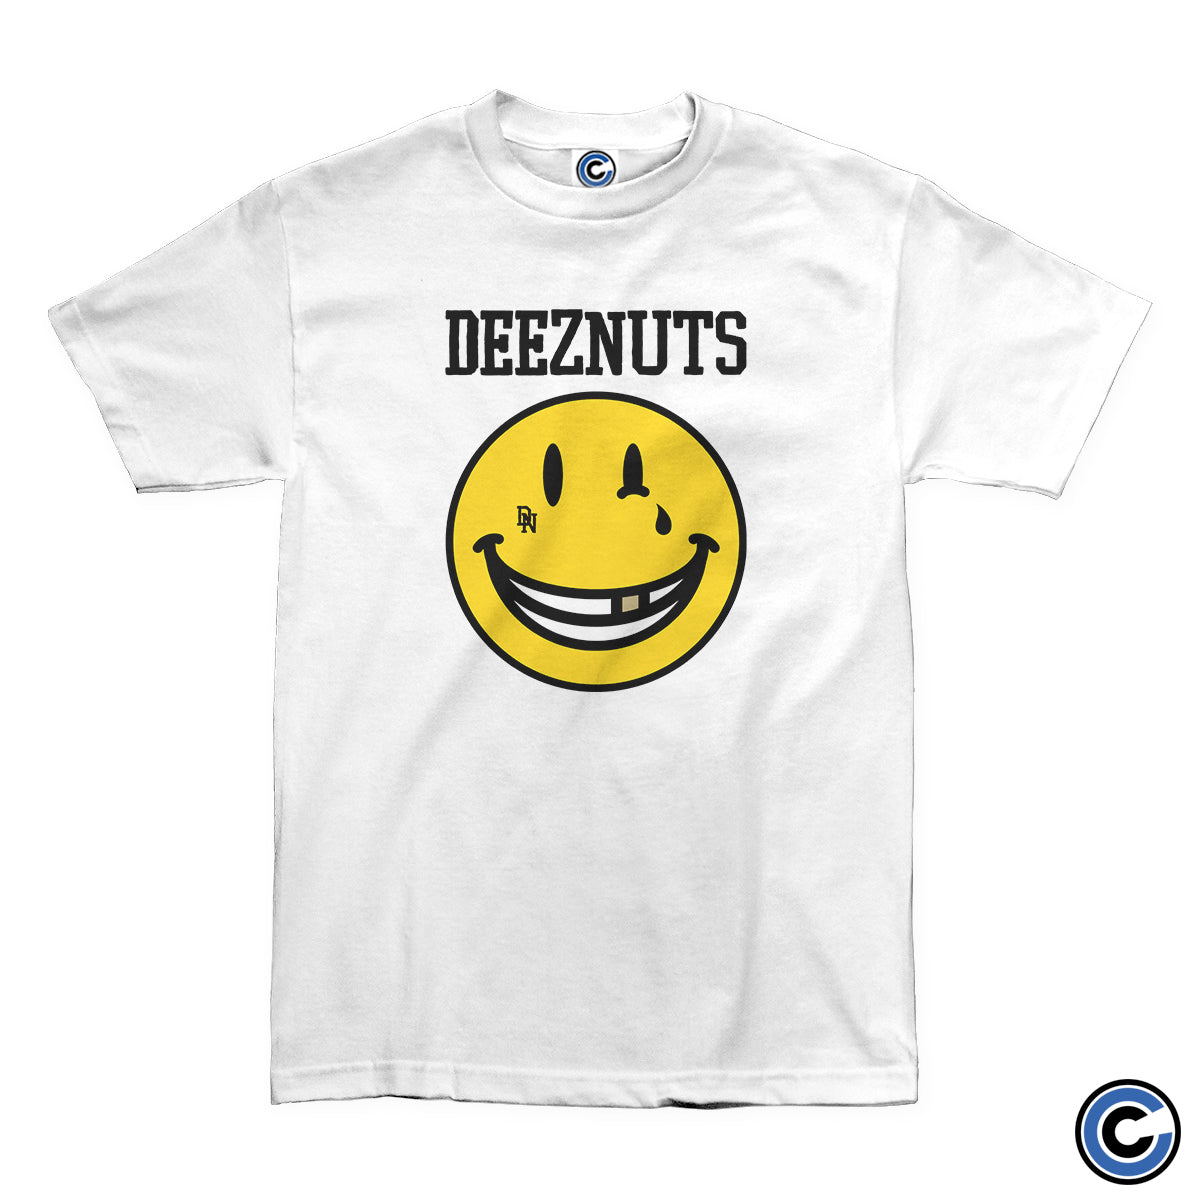 Deez Nuts "Smiley" Shirt